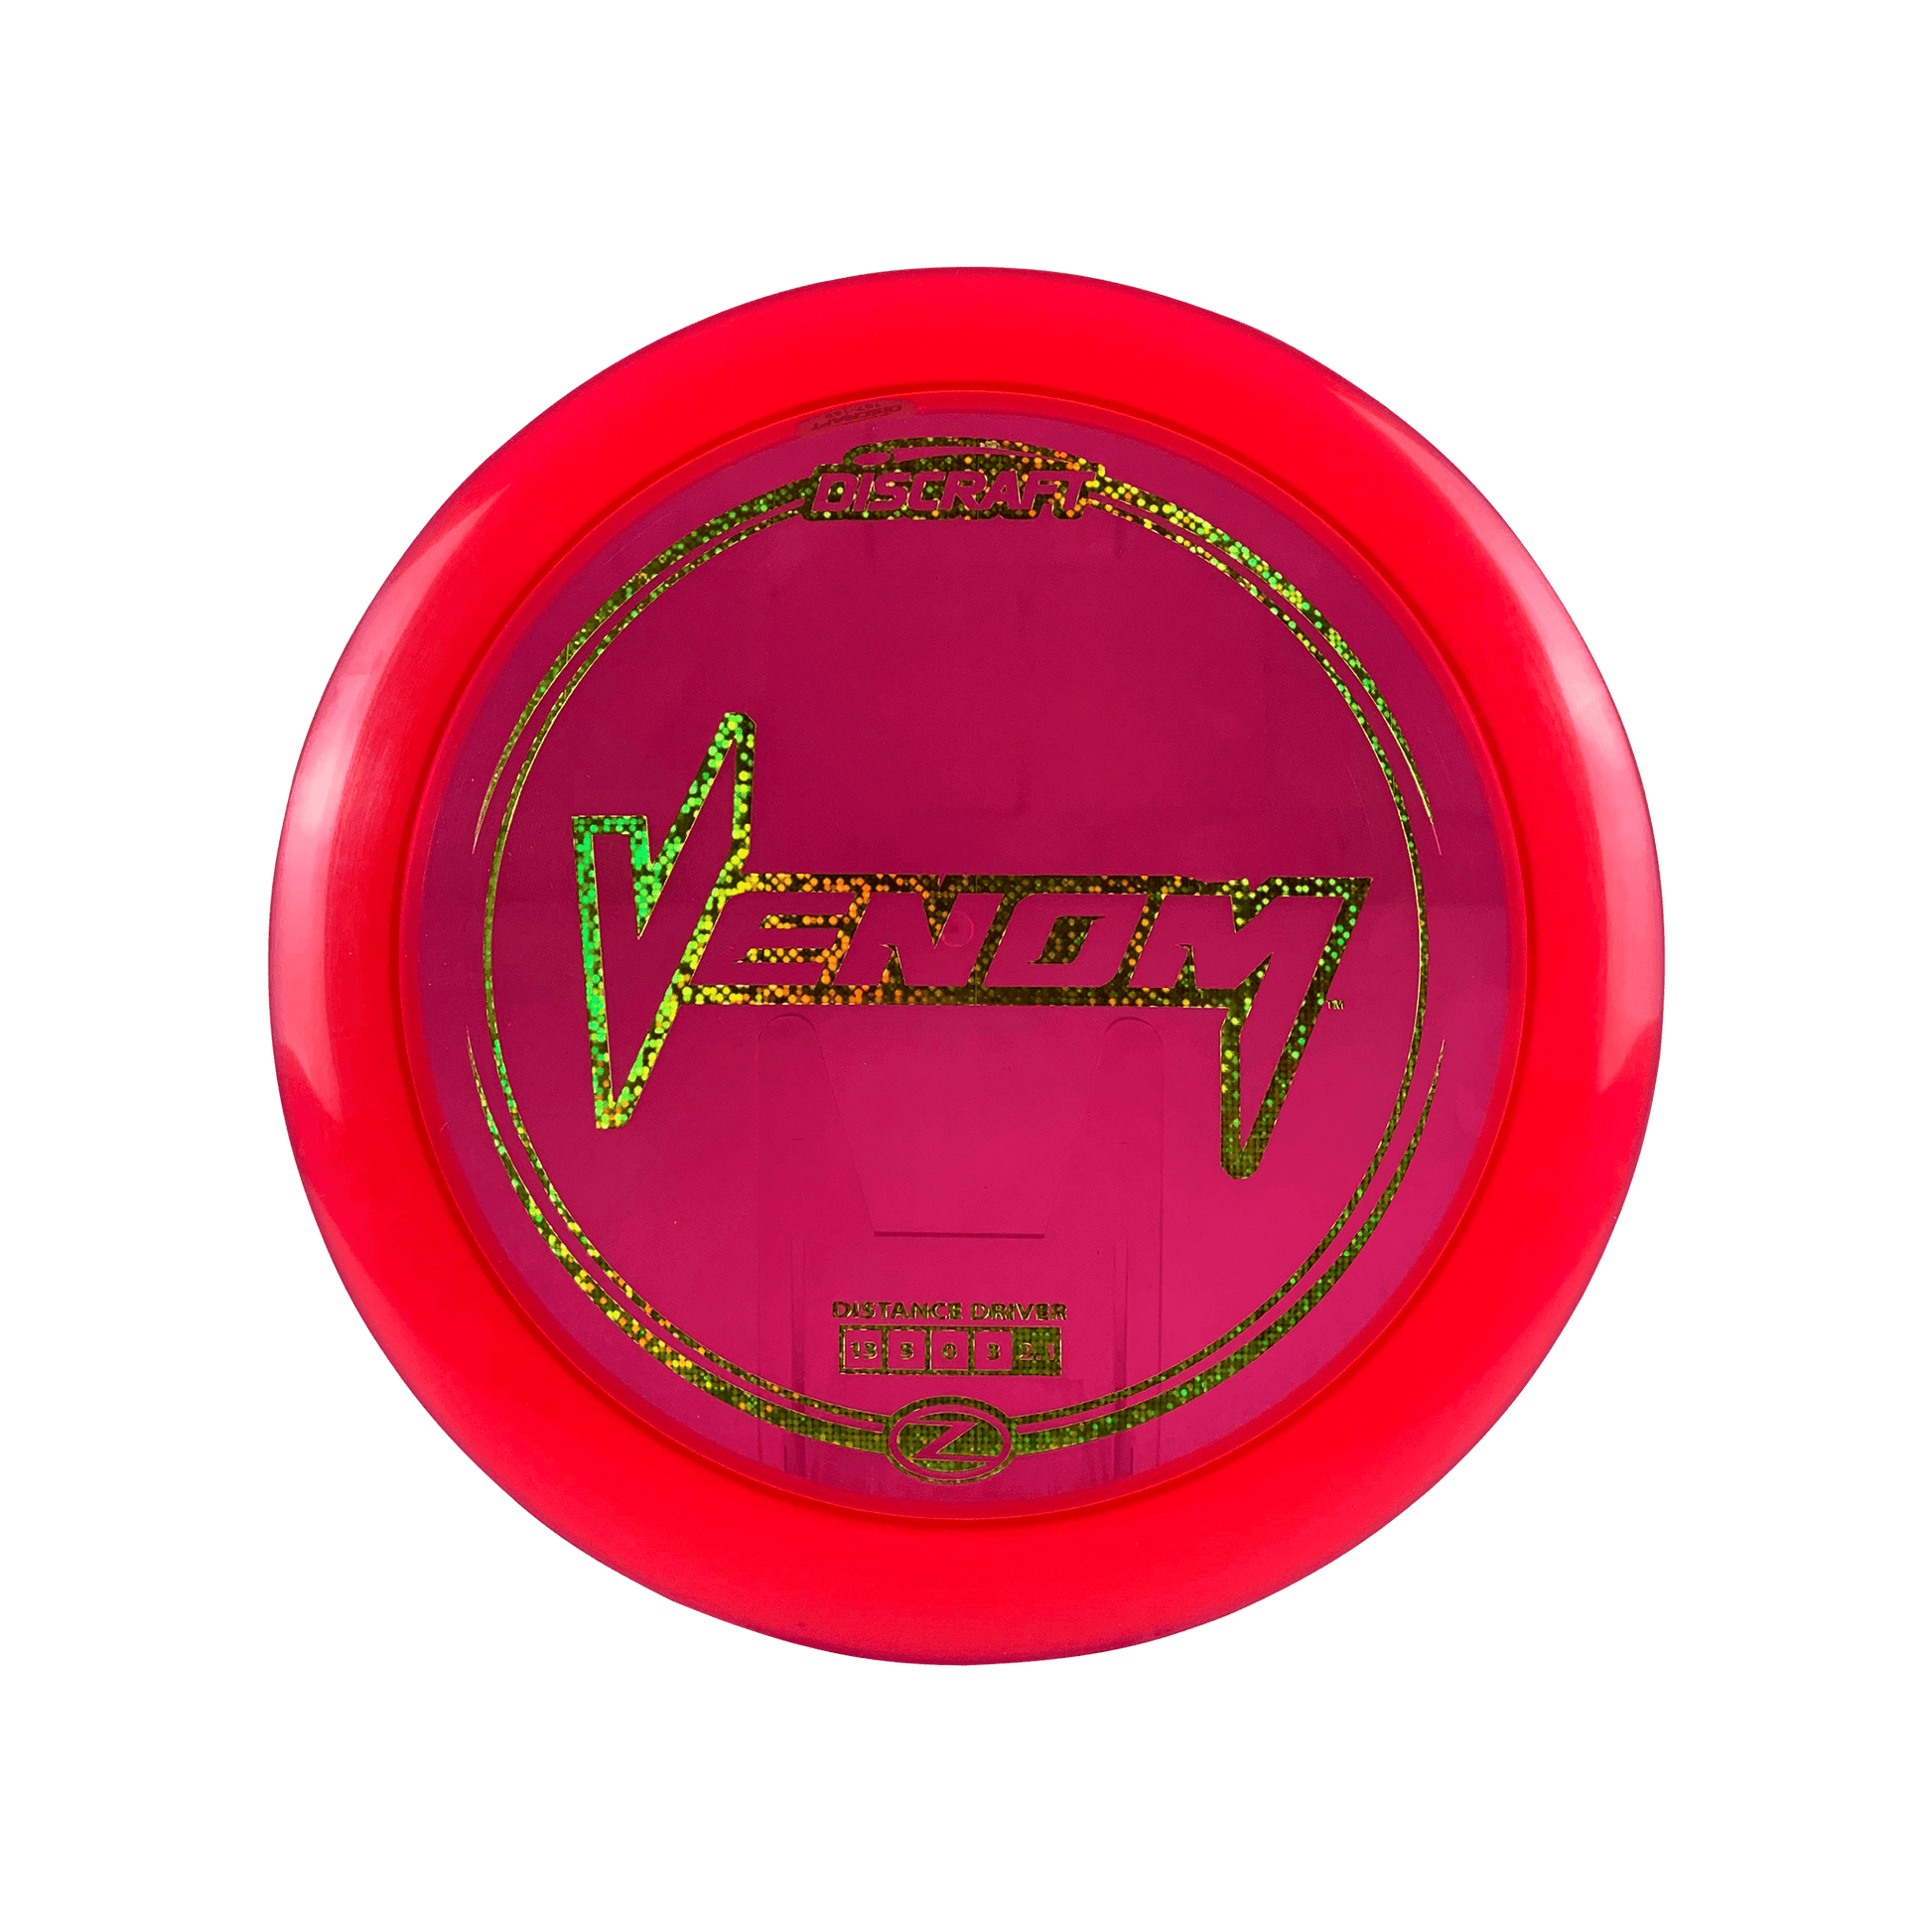 Z Venom Disc Discraft red 170 